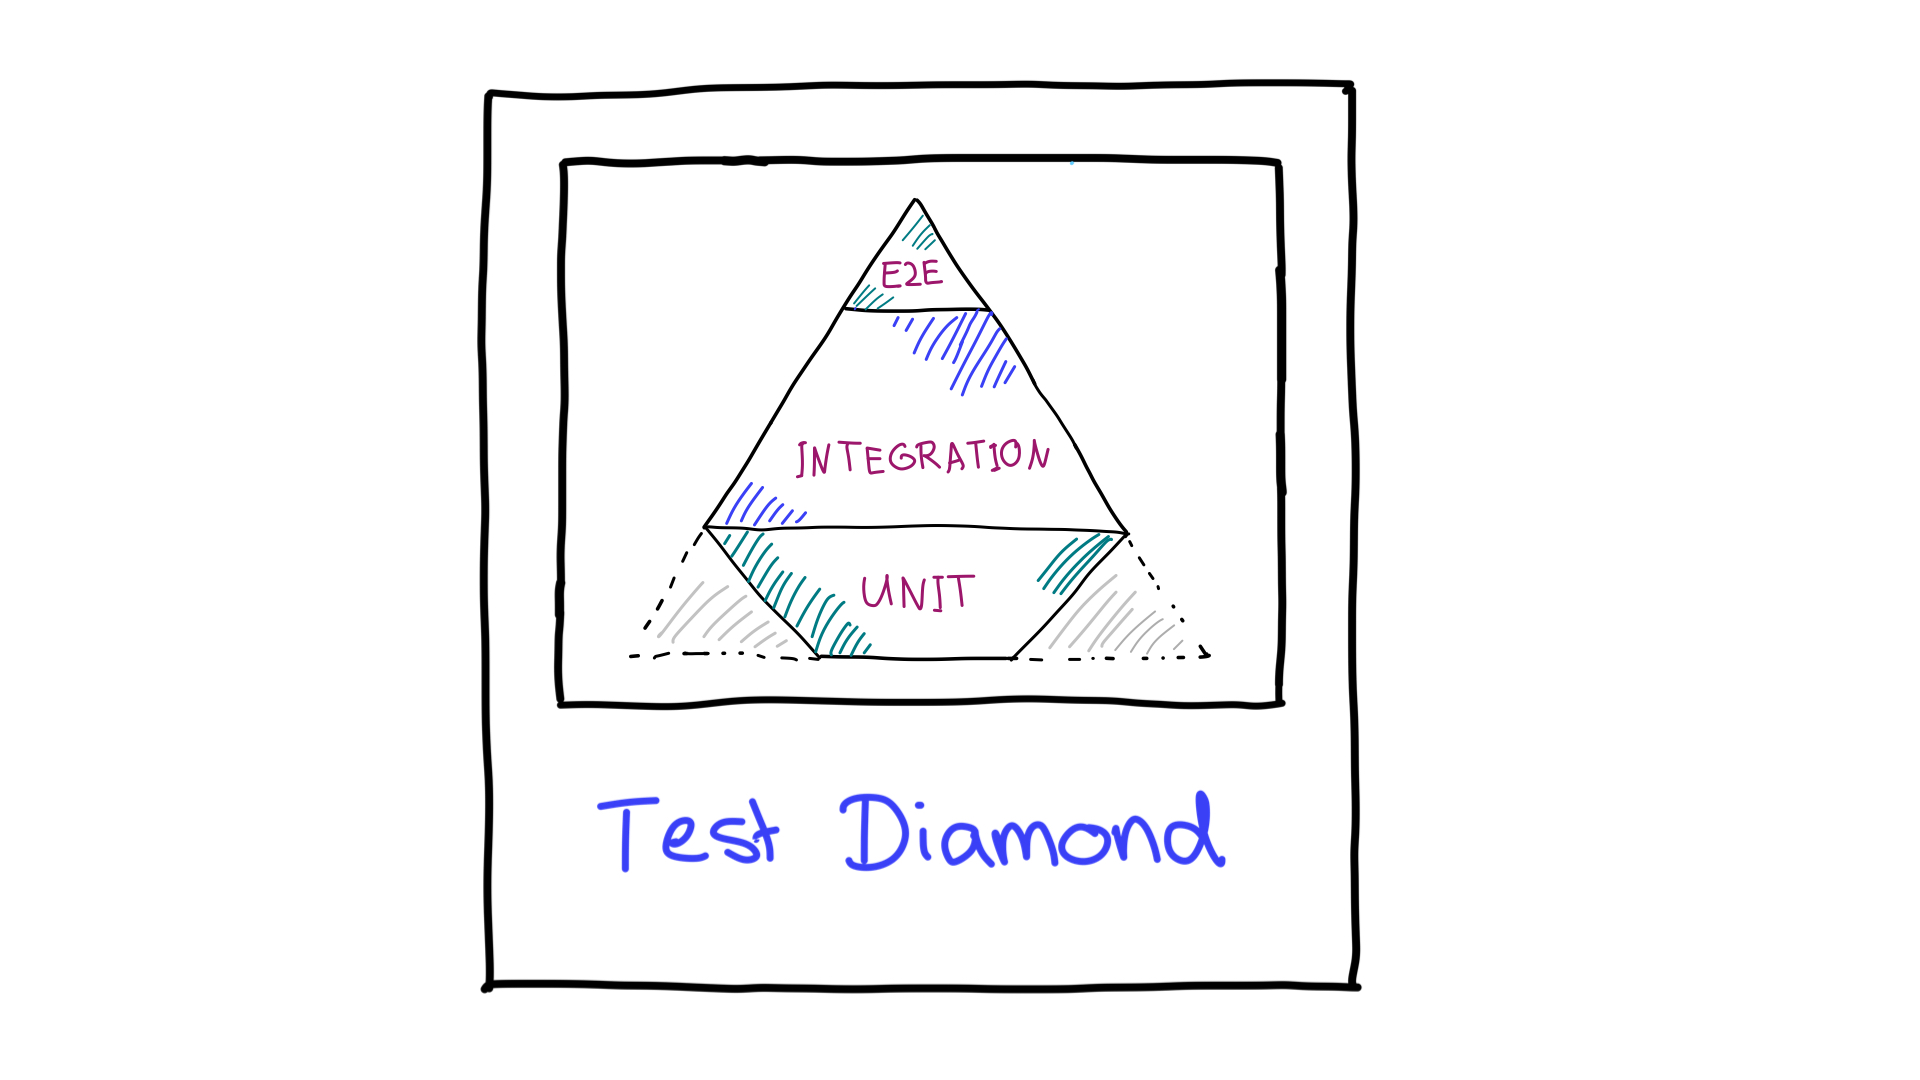 The test diamond.